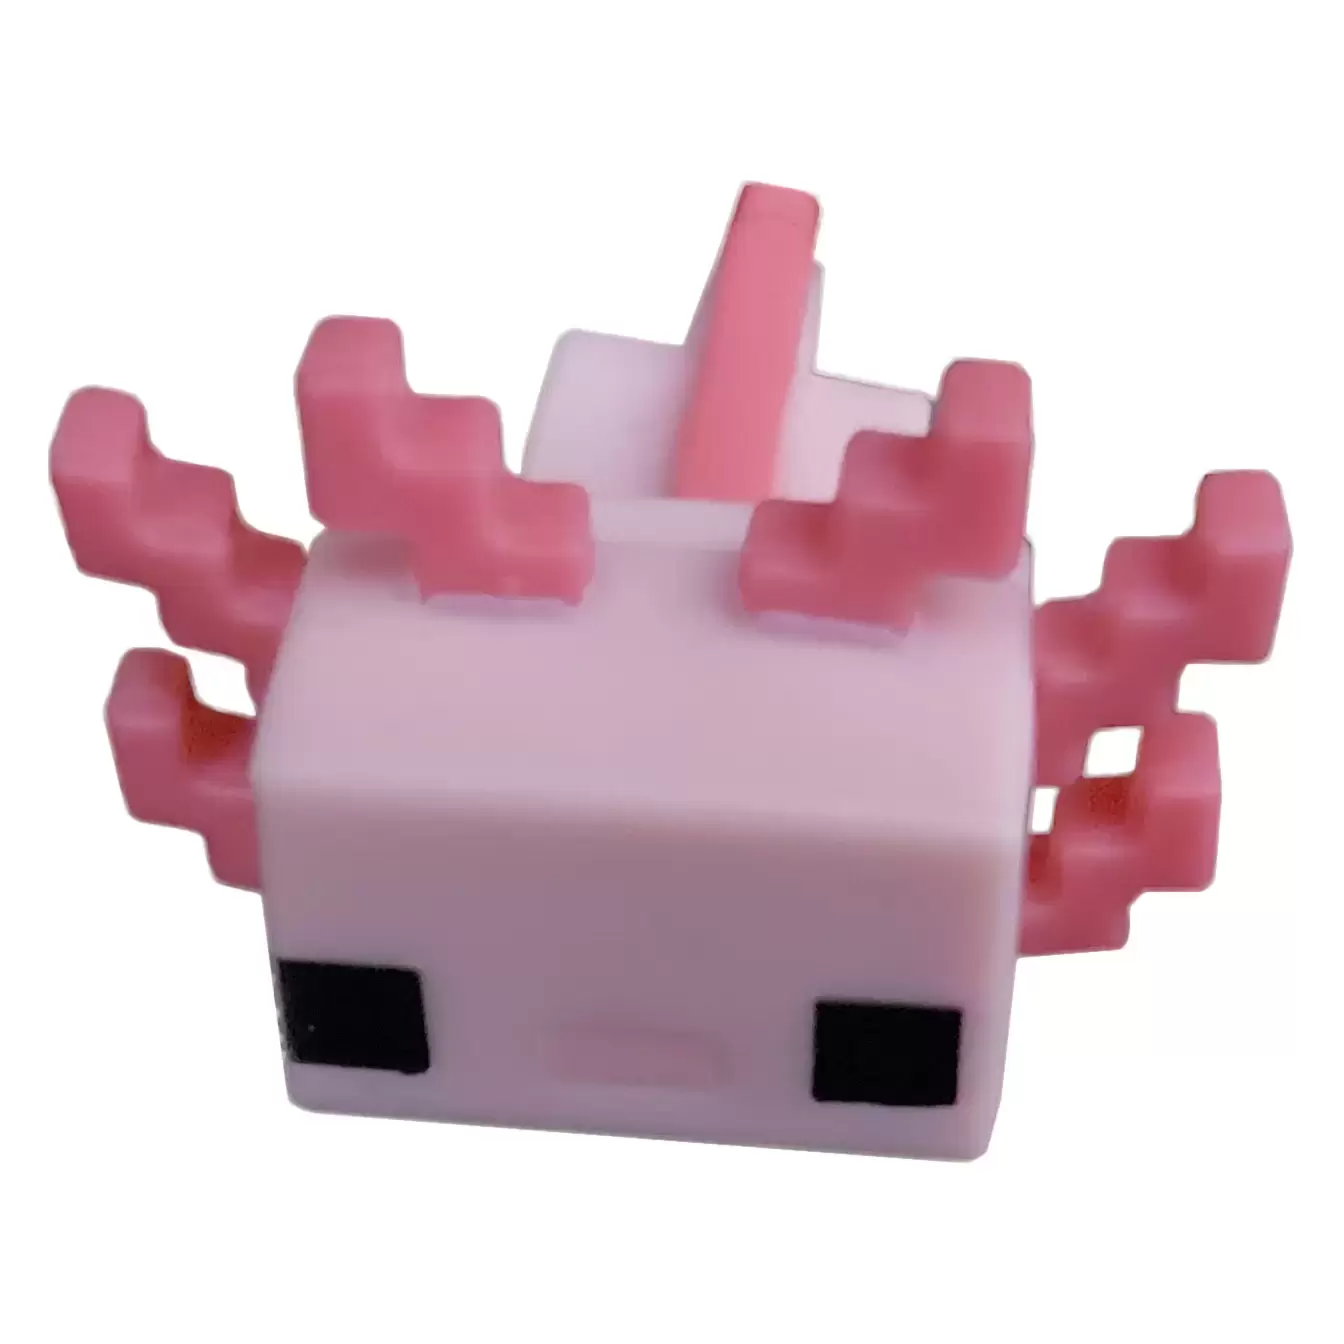 Minecraft Mini Figures Series 2 - Axolotl